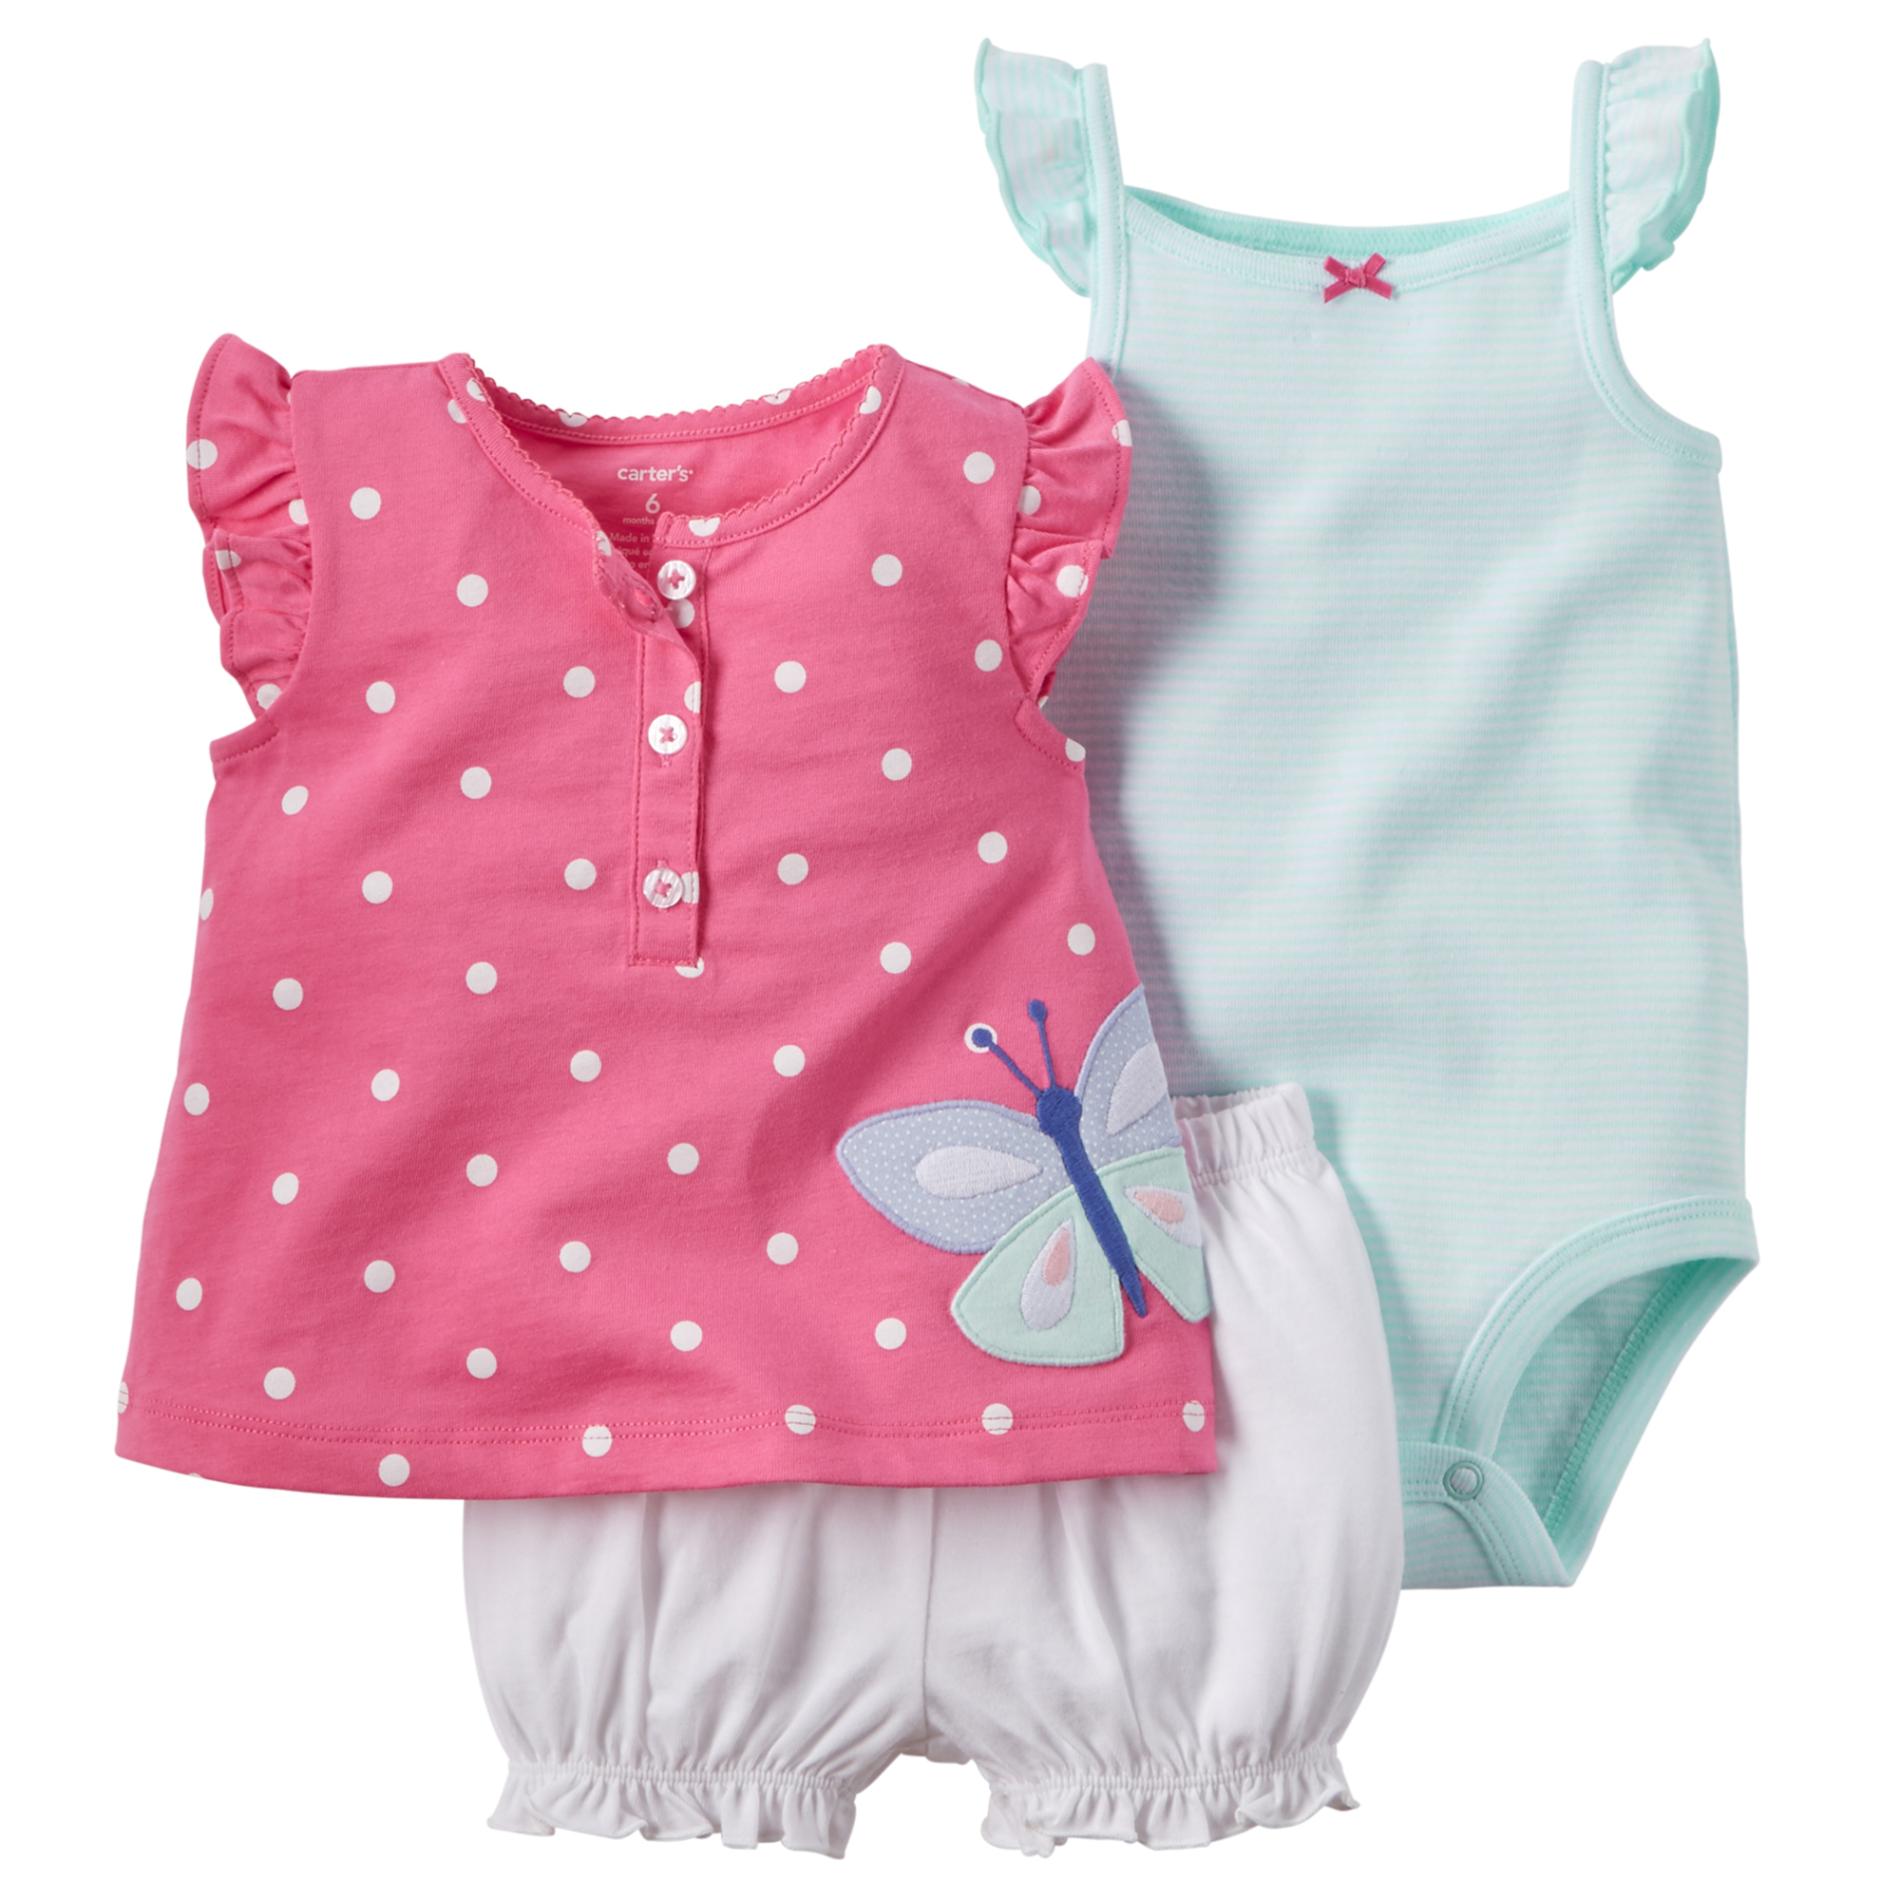 Newborn & Infant Girl's Top, Bodysuit & Diaper Cover - Butterfly